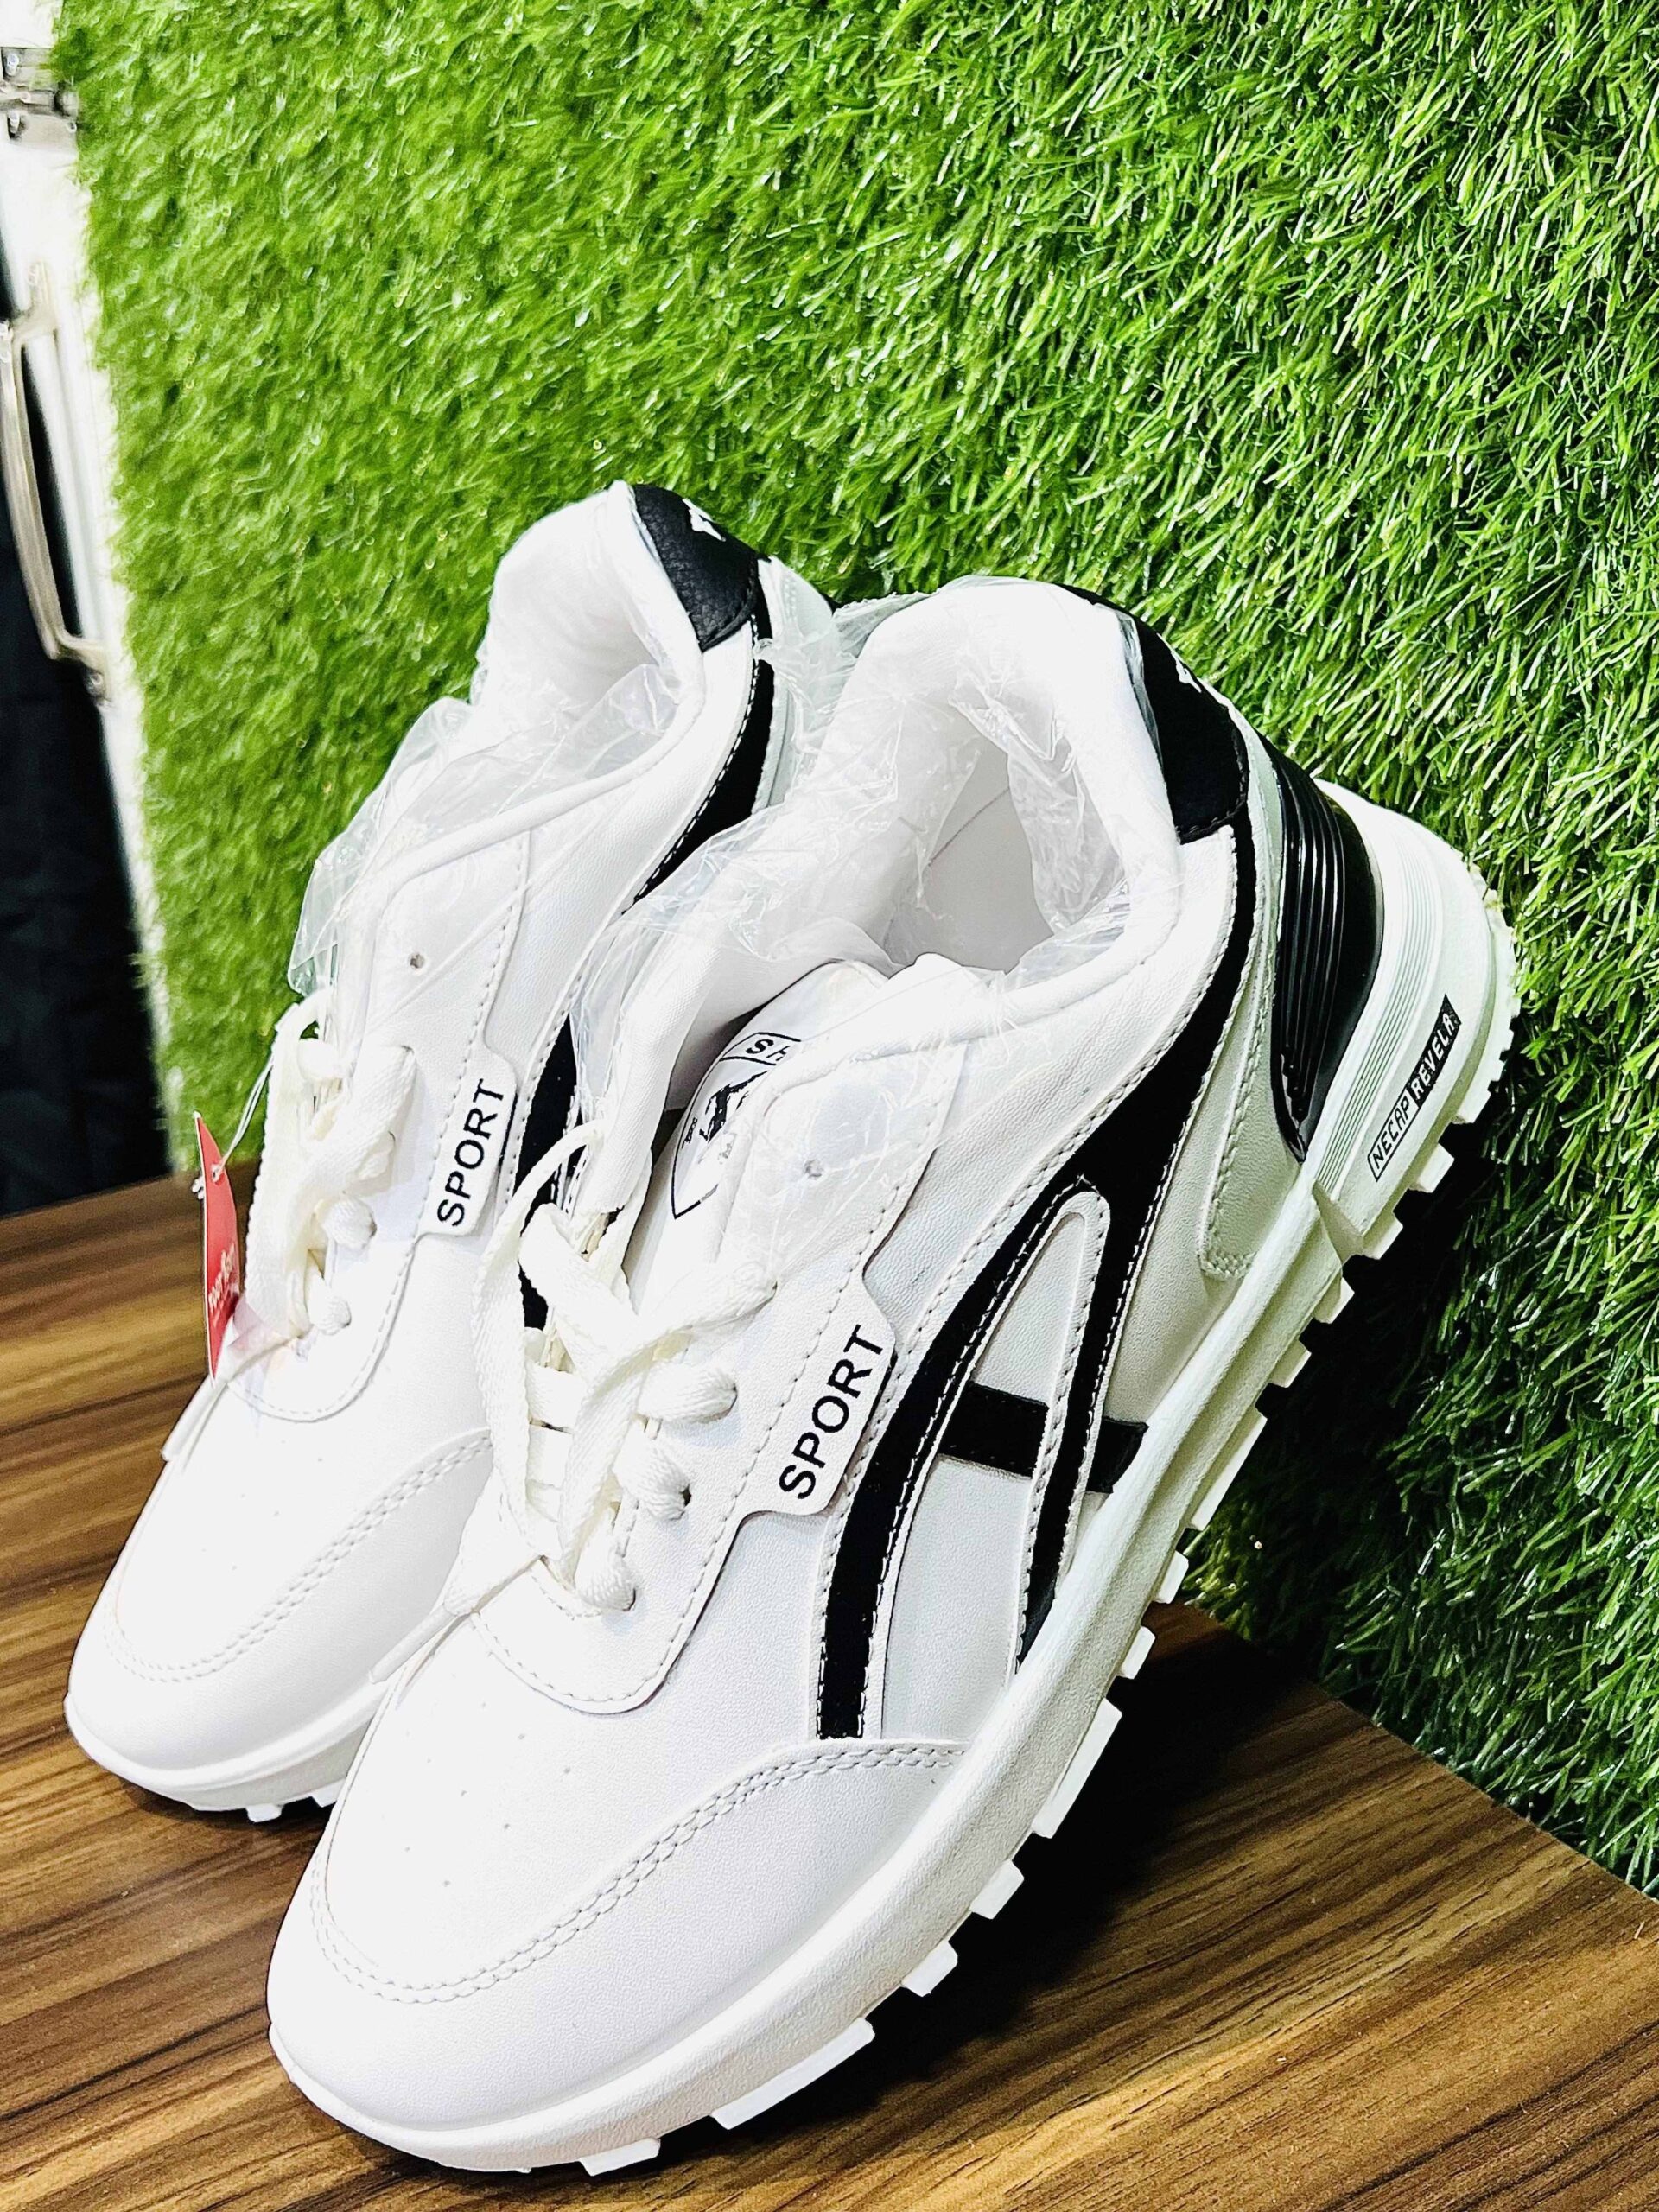 Quality Children White Sneakers in Kosofe - Shoes, Maglitz Enterprises |  Jiji.ng